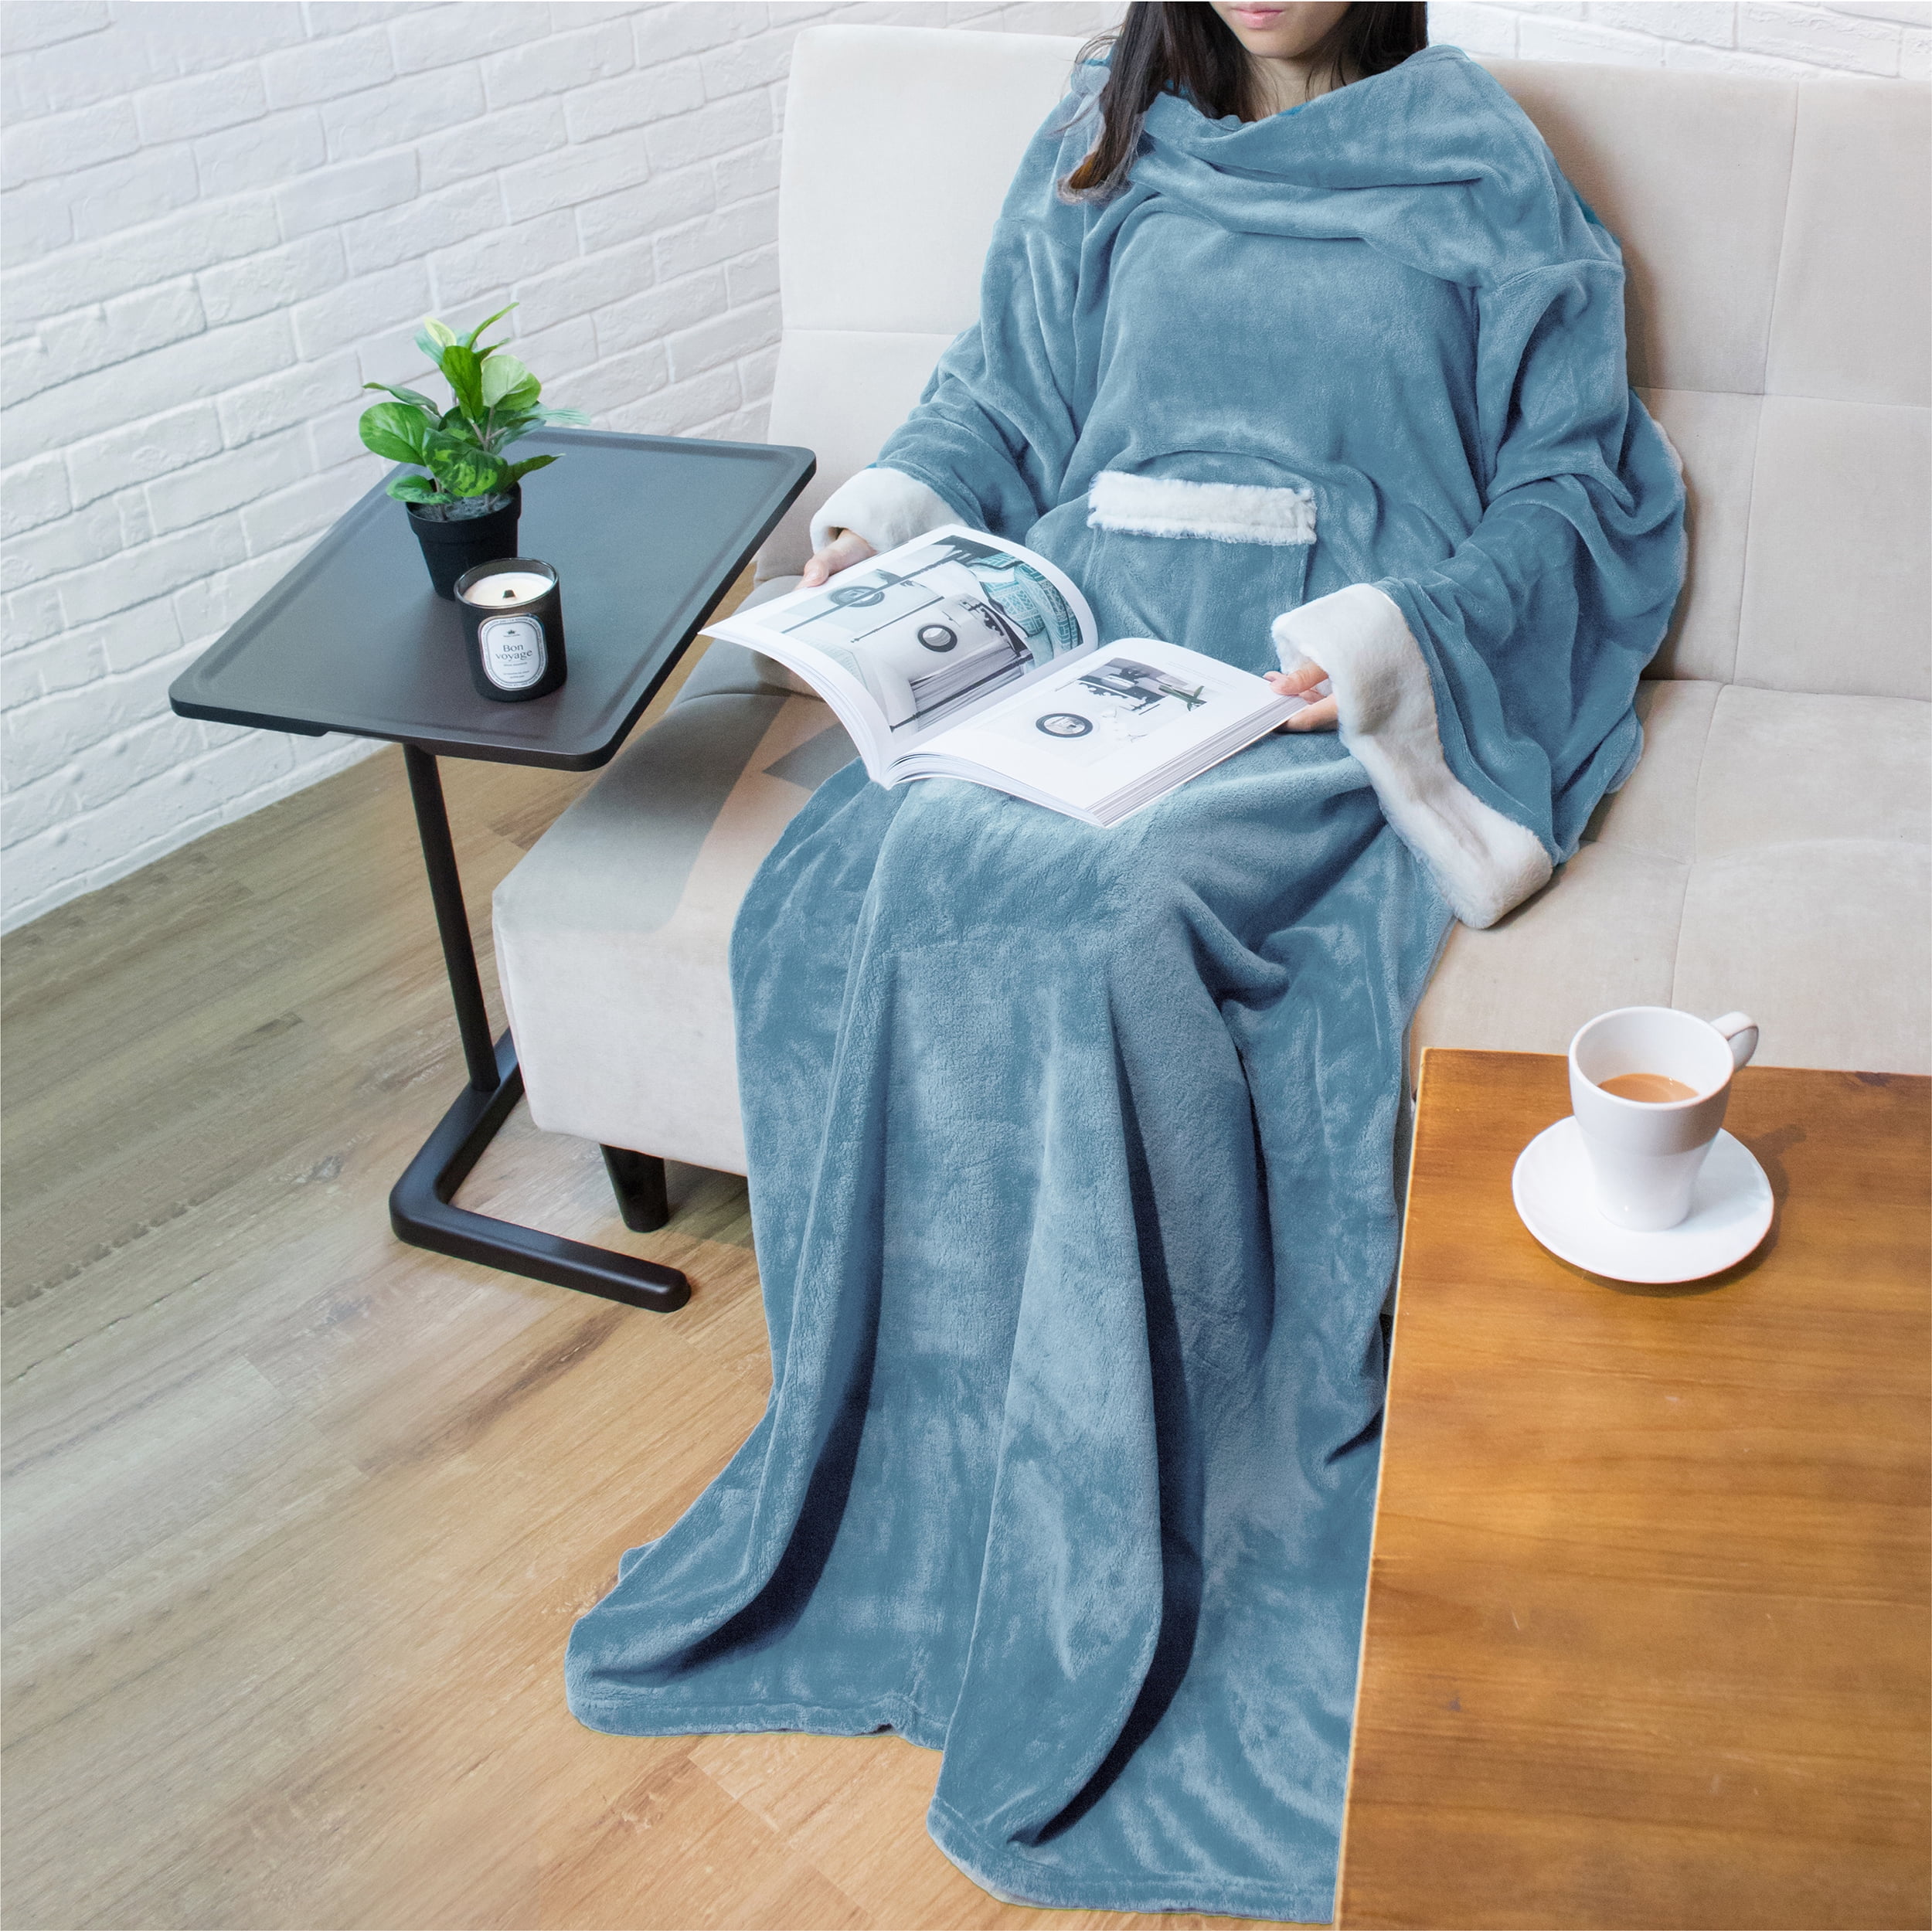 PAVILIA Deluxe Fleece Blanket With Sleeves For Adult